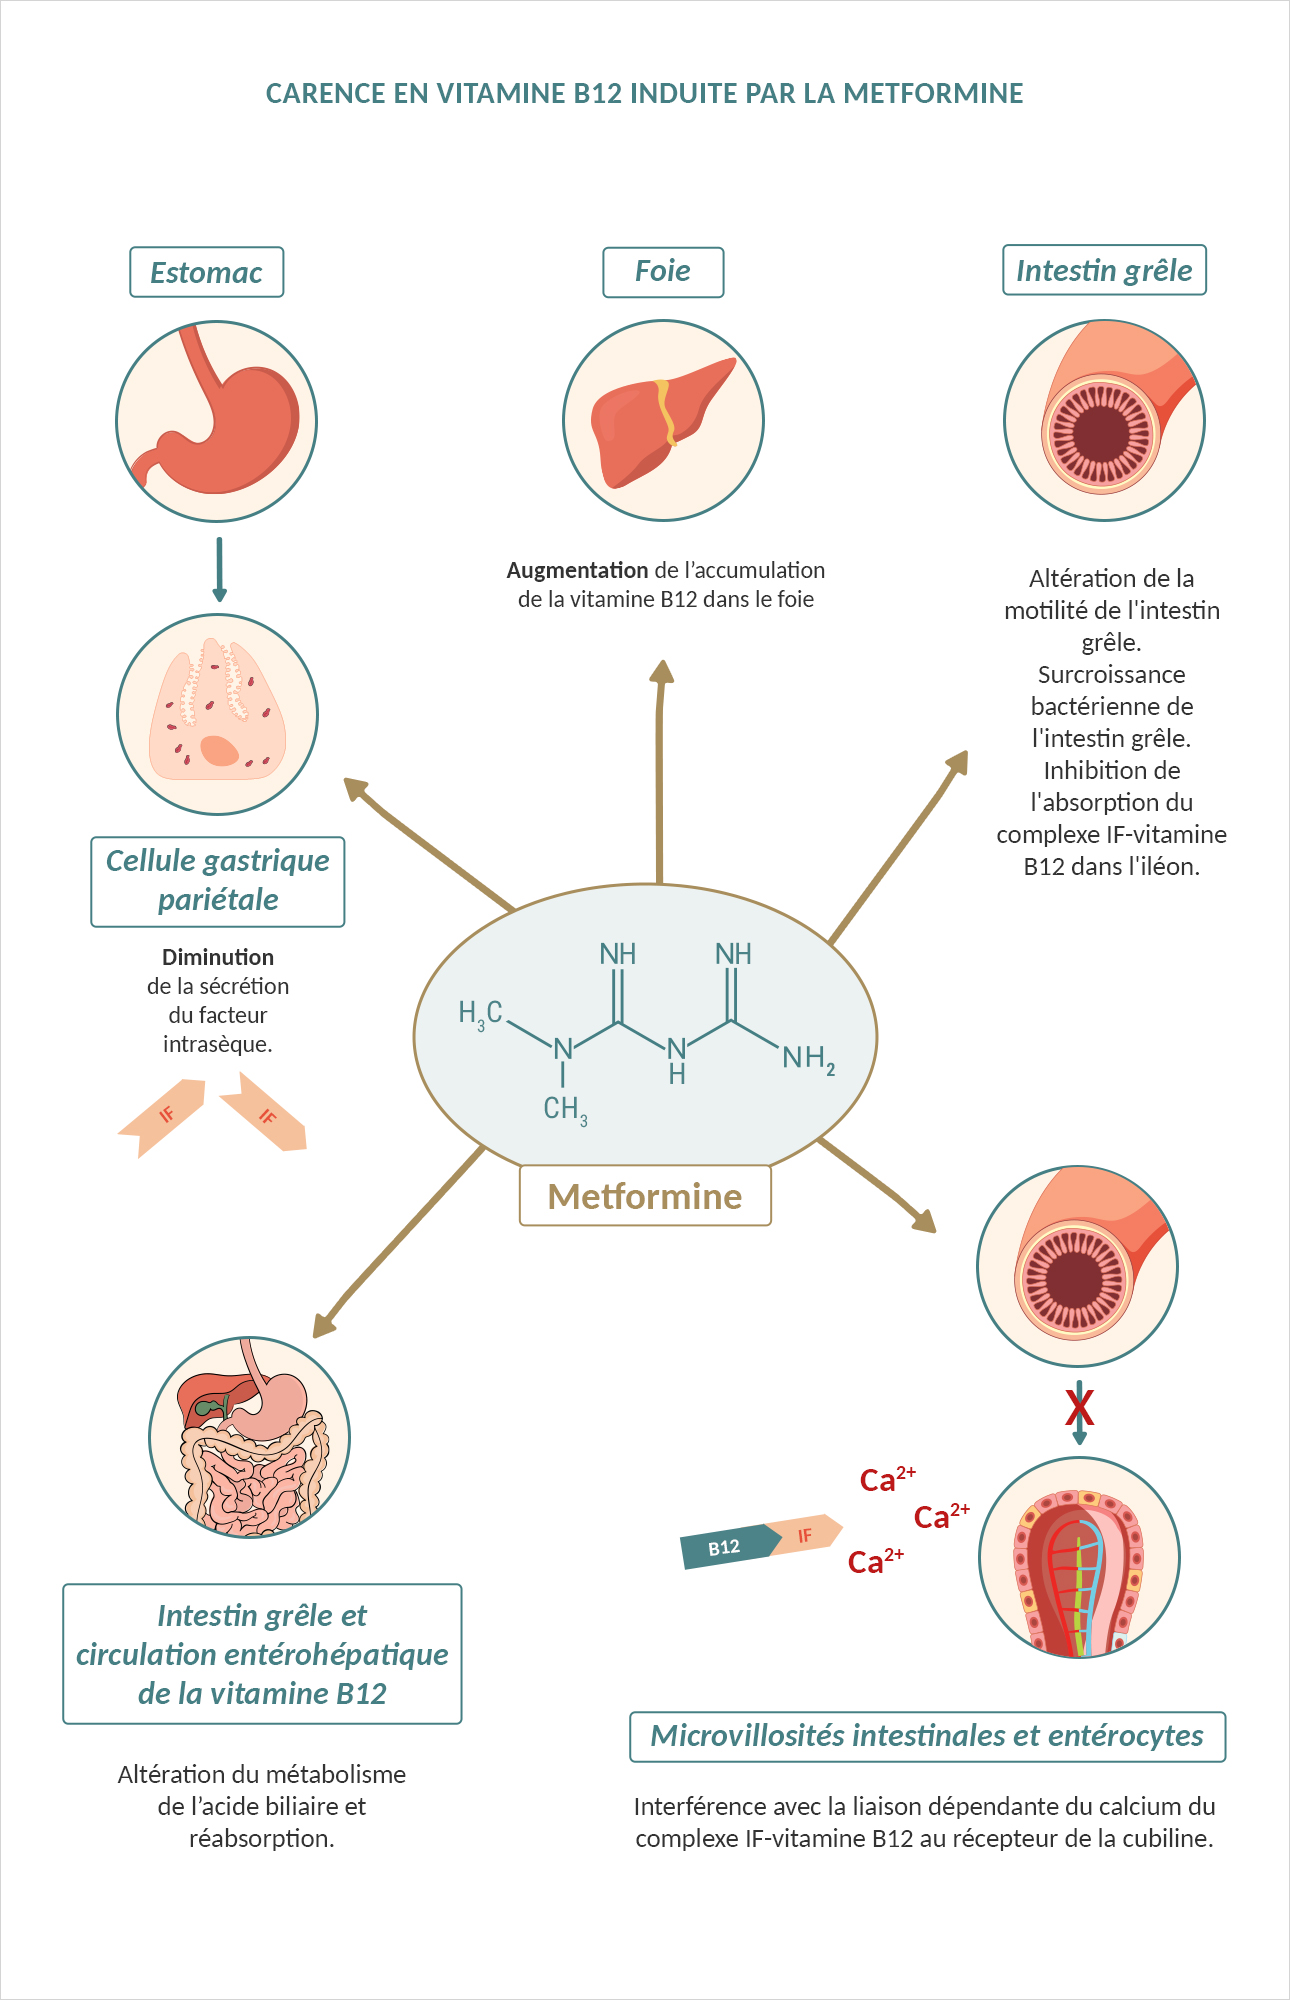 Mécanismes potentiels expliquant les méfaits de la metformine sur le statut en vitamine B12